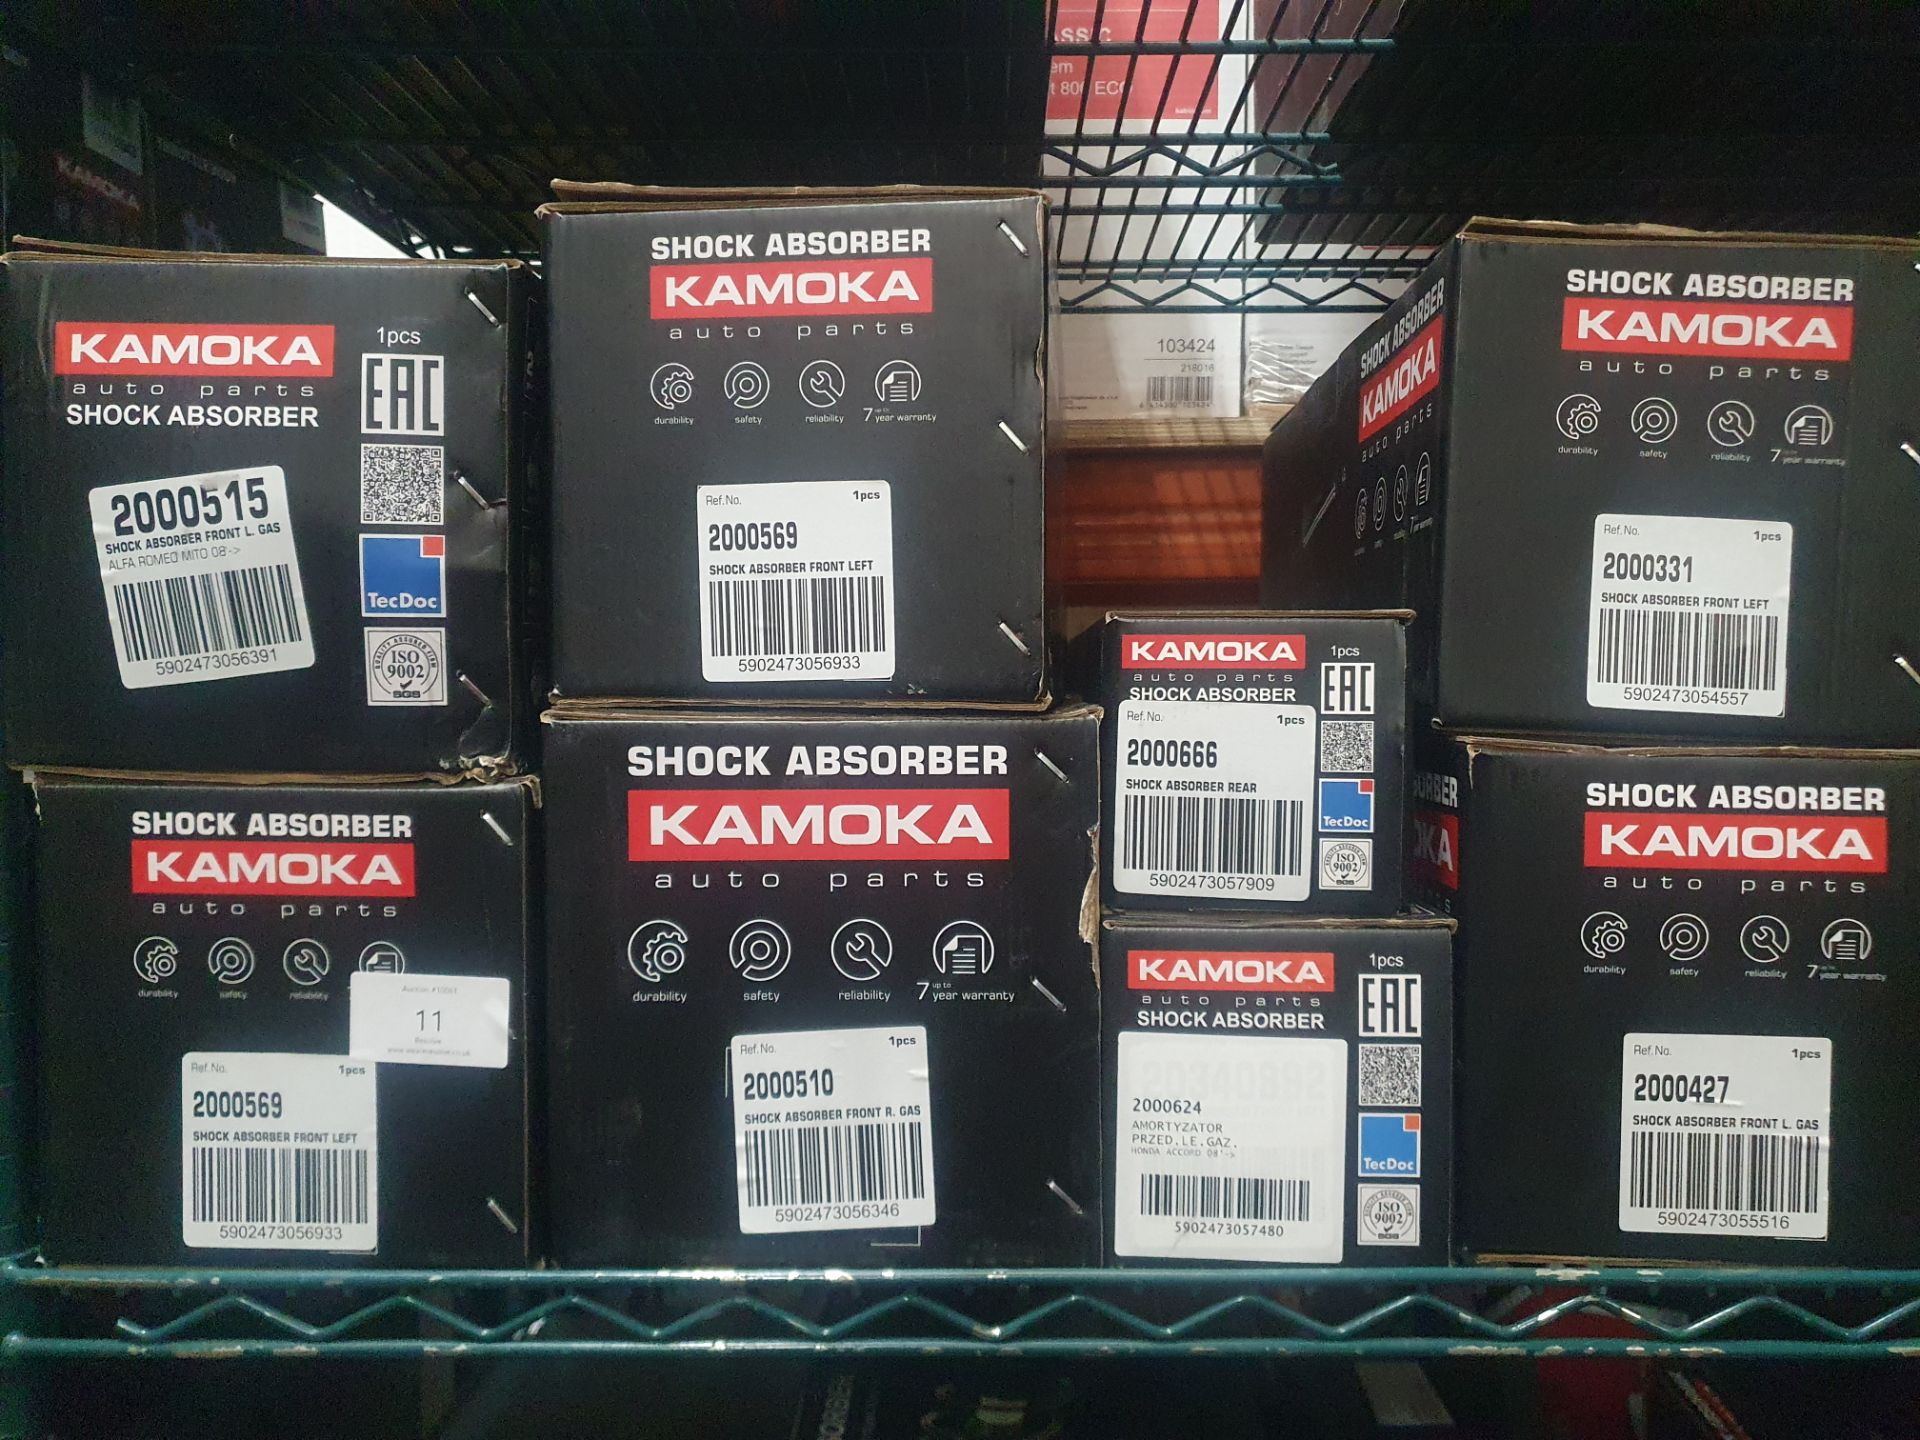 8 x Kamoka shock absorber assorted